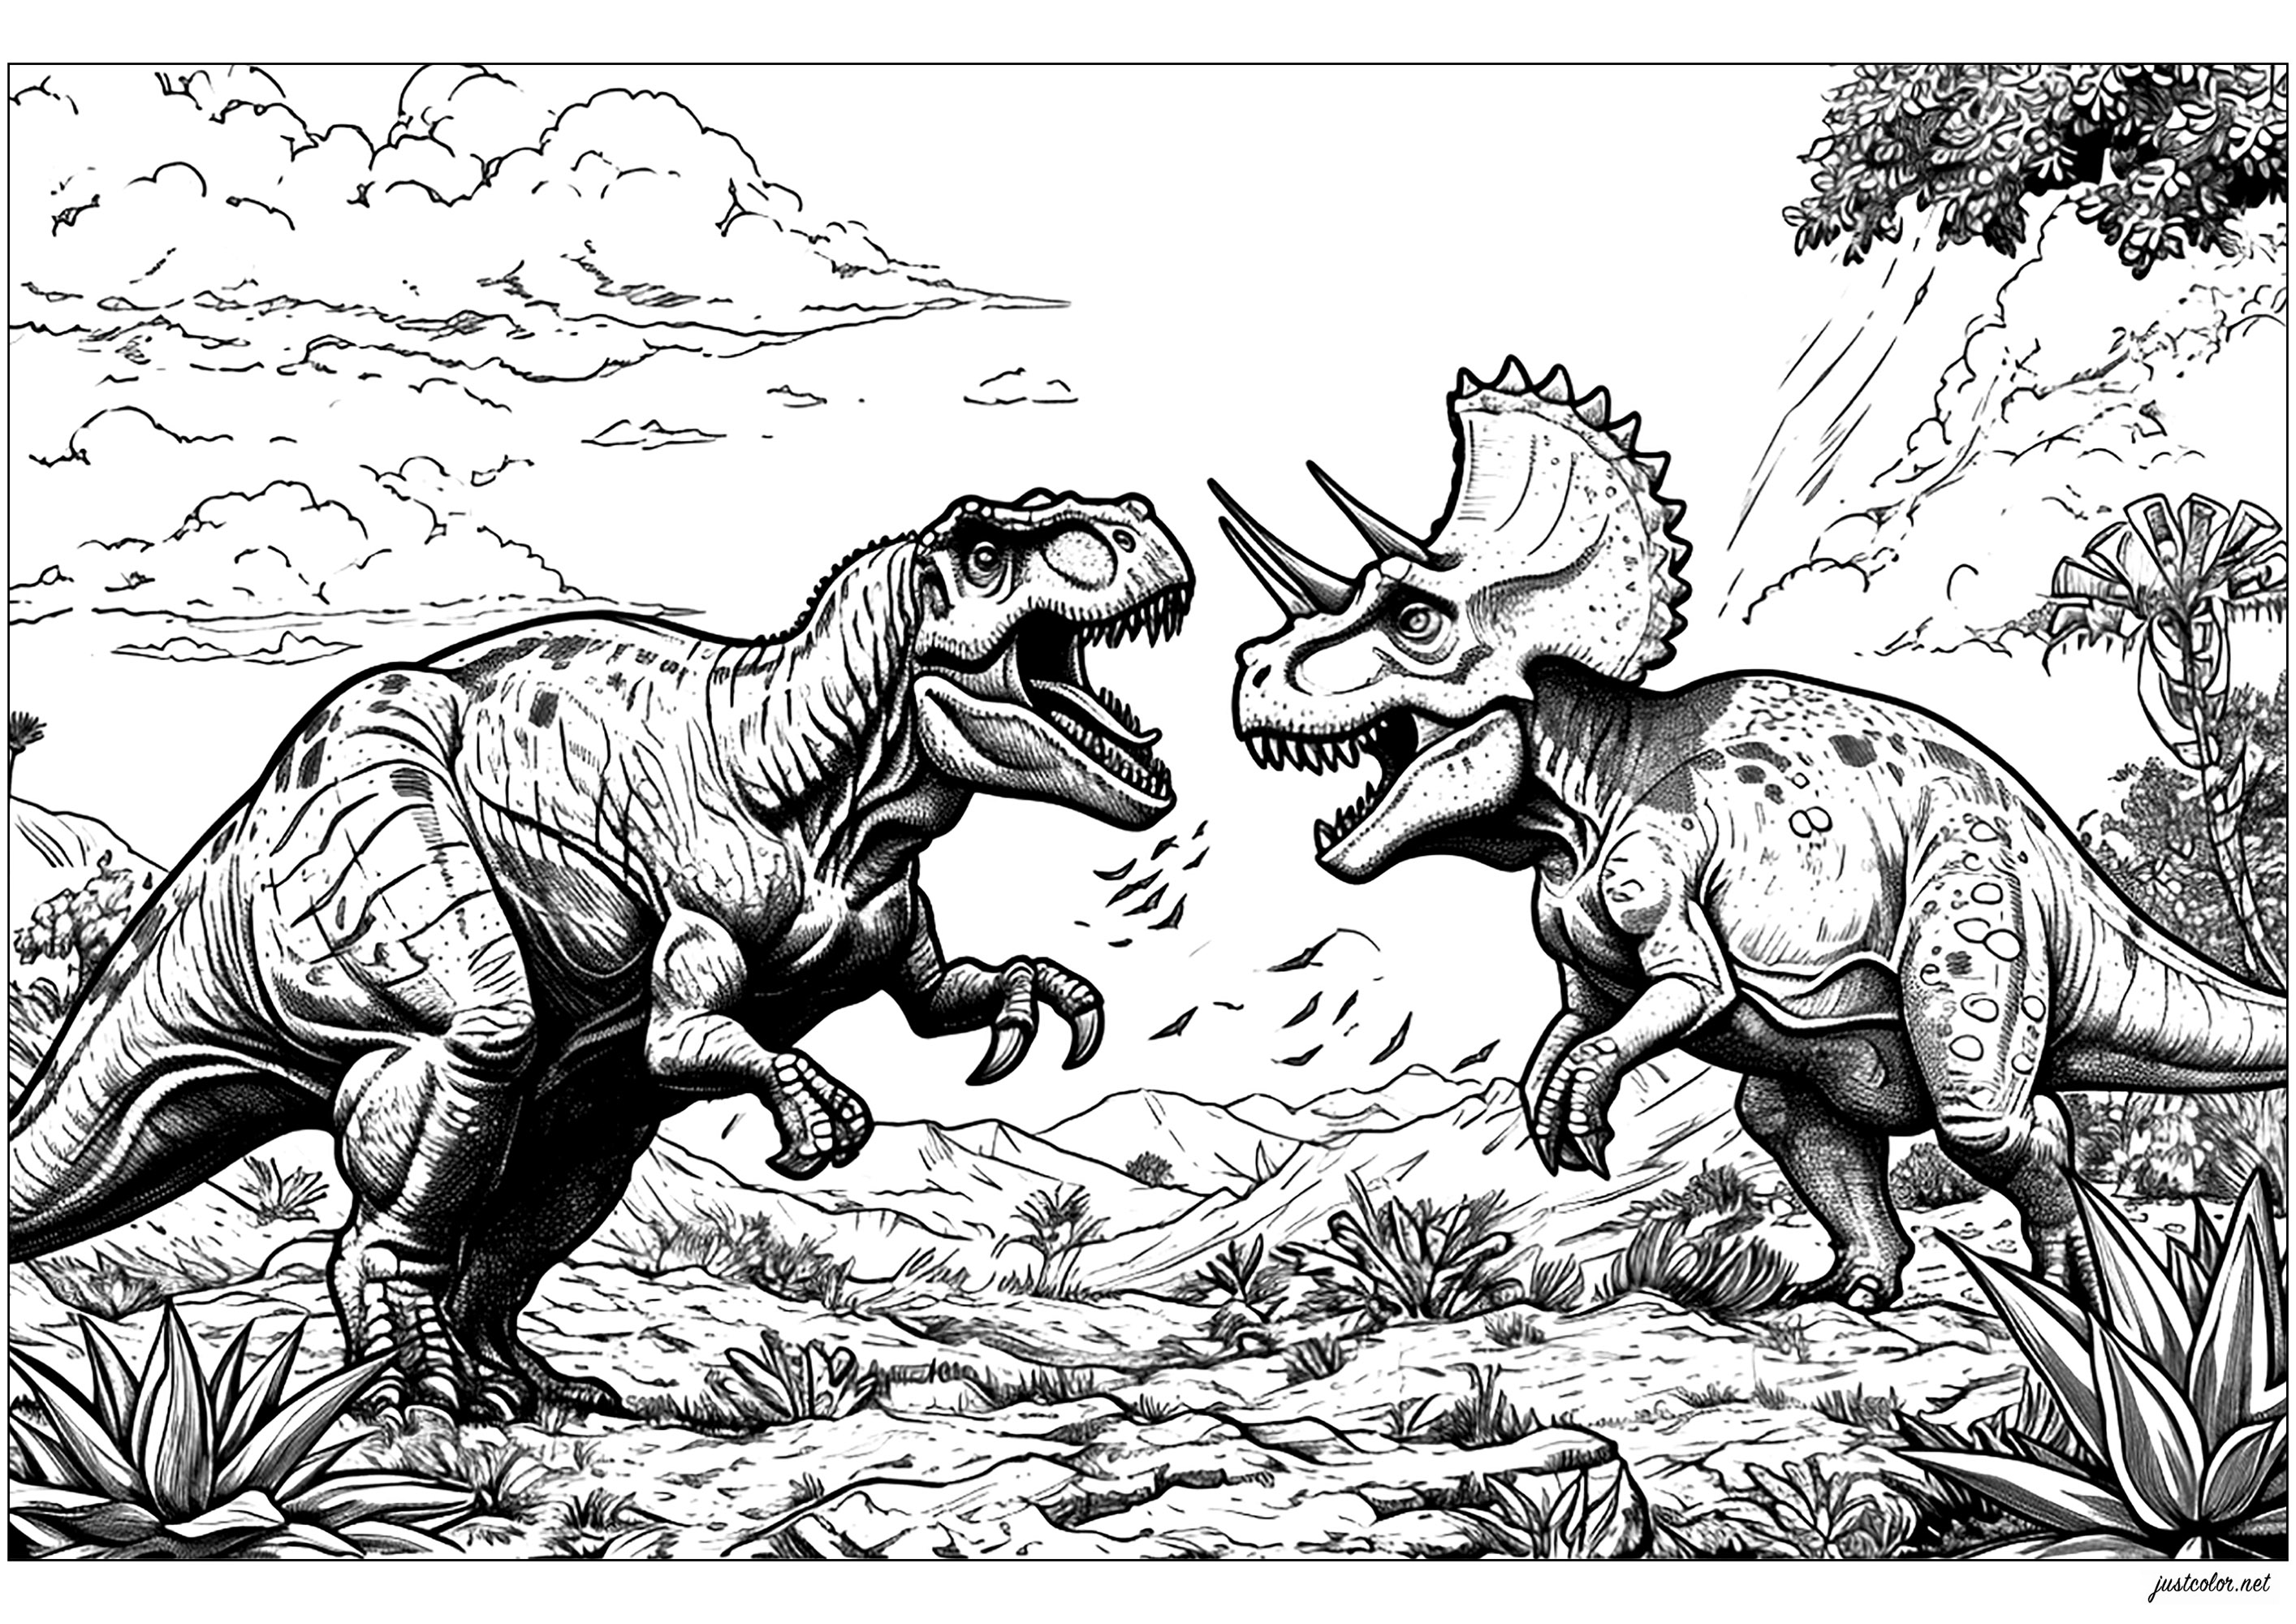 Batalla entre dos dinosaurios: Tiranosaurio y Triceraptos